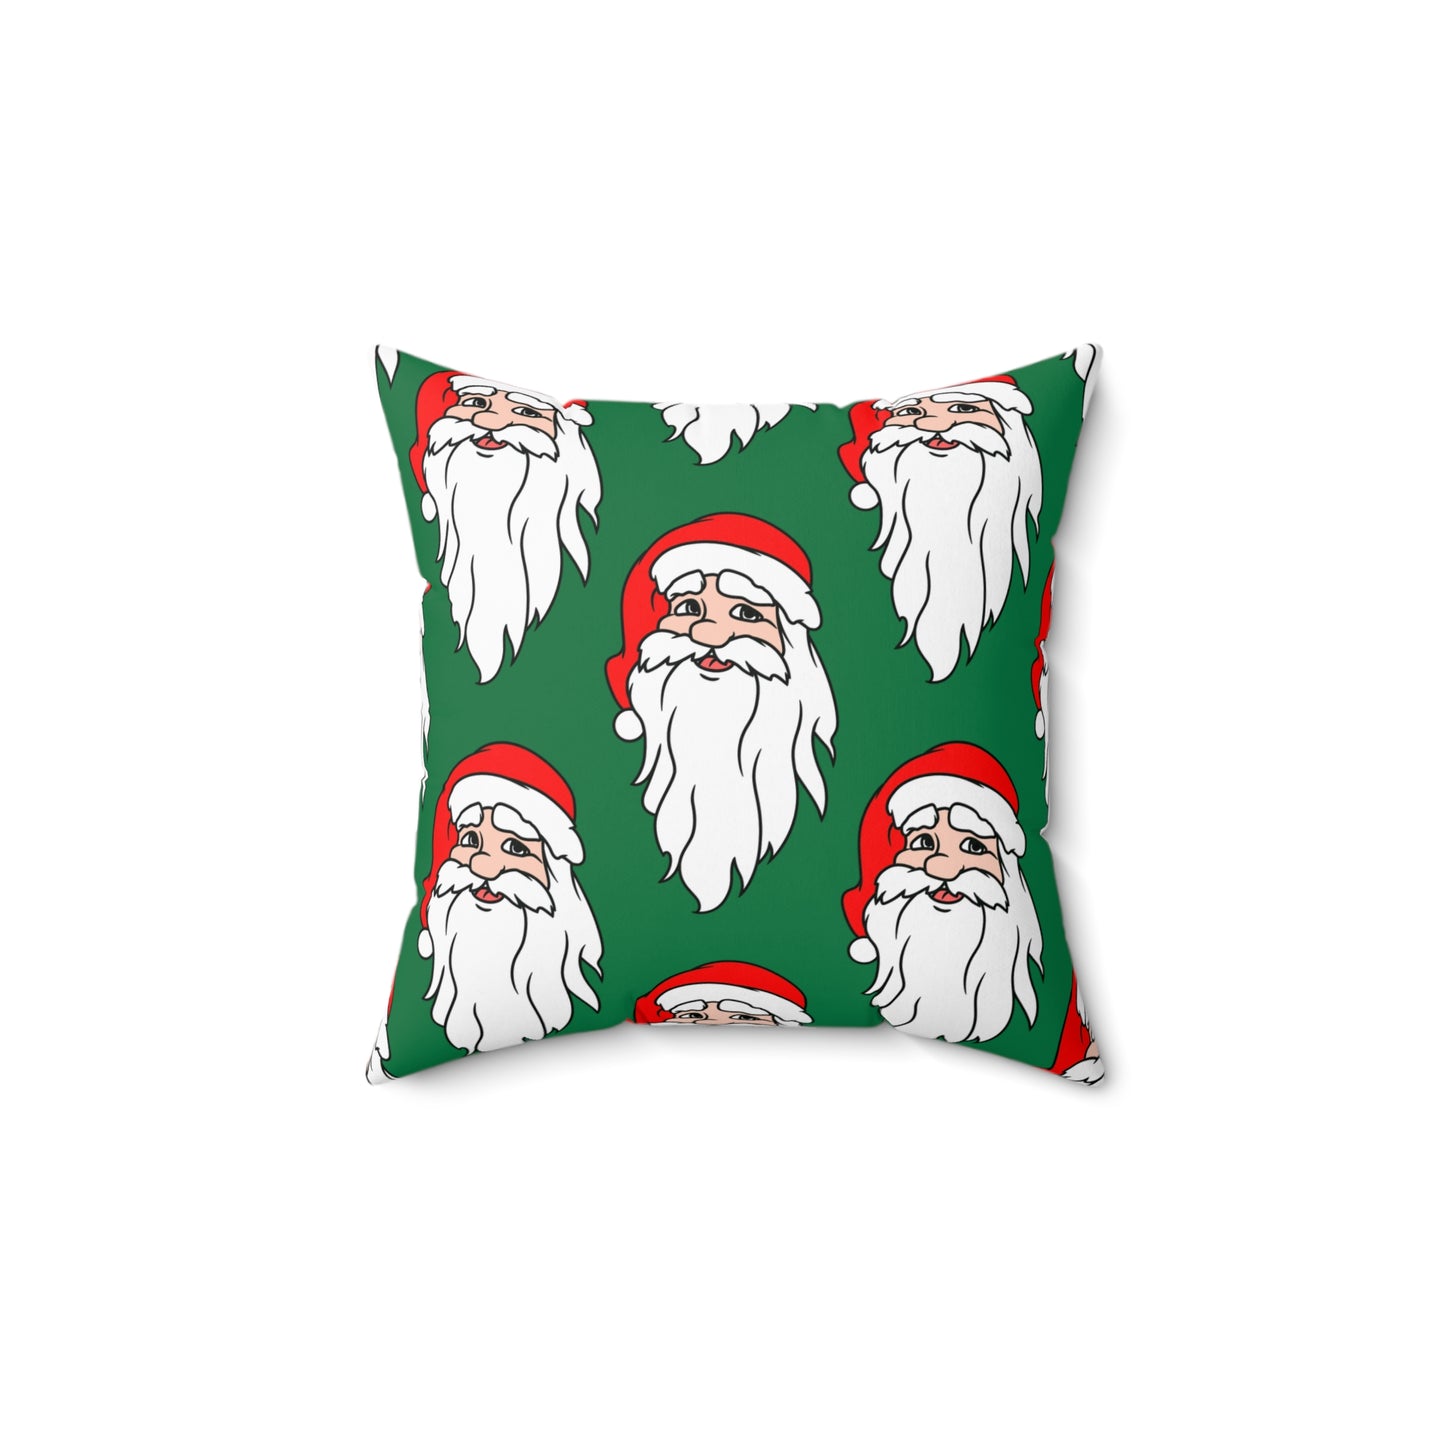 Merry Christmas - Spun Polyester Square Pillow